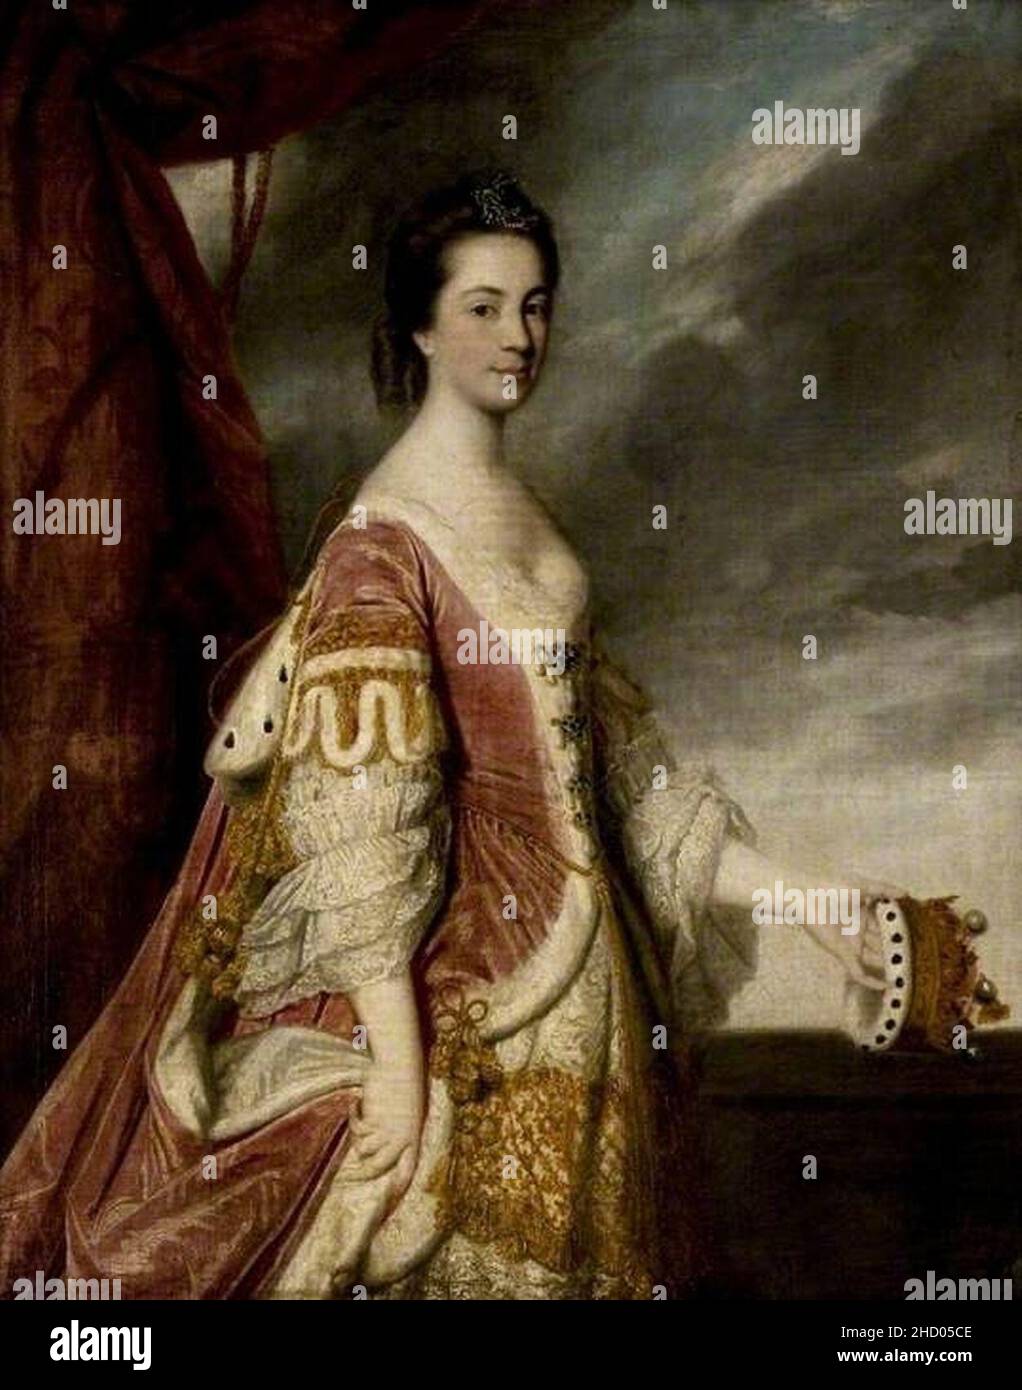 Reynolds - Isabella, Countess of Erroll. Stock Photo